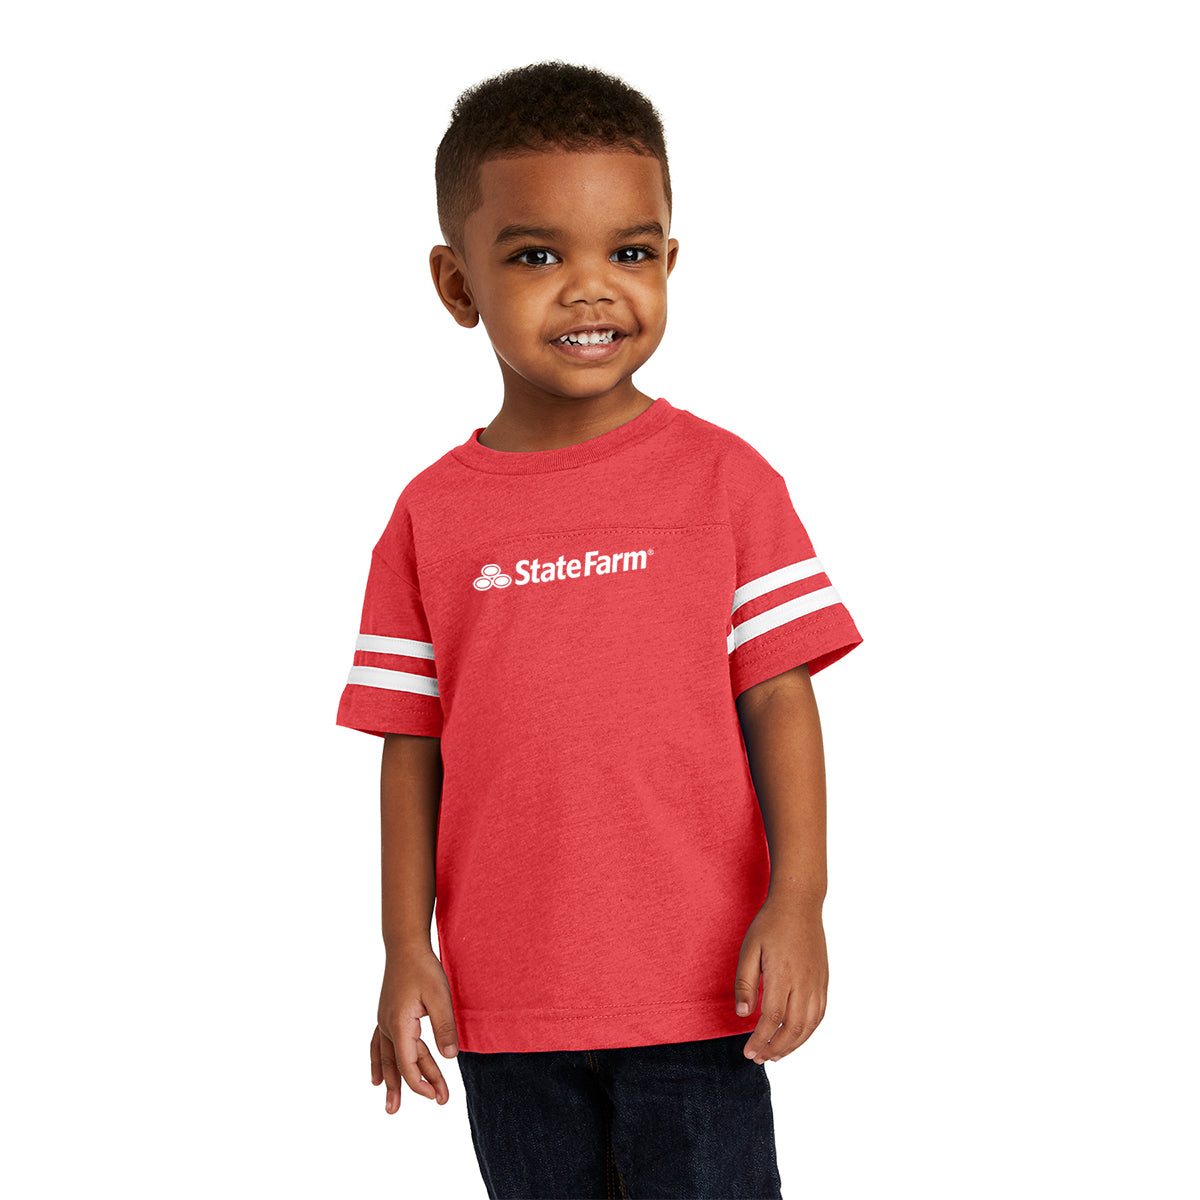 Toddler Football T-Shirt